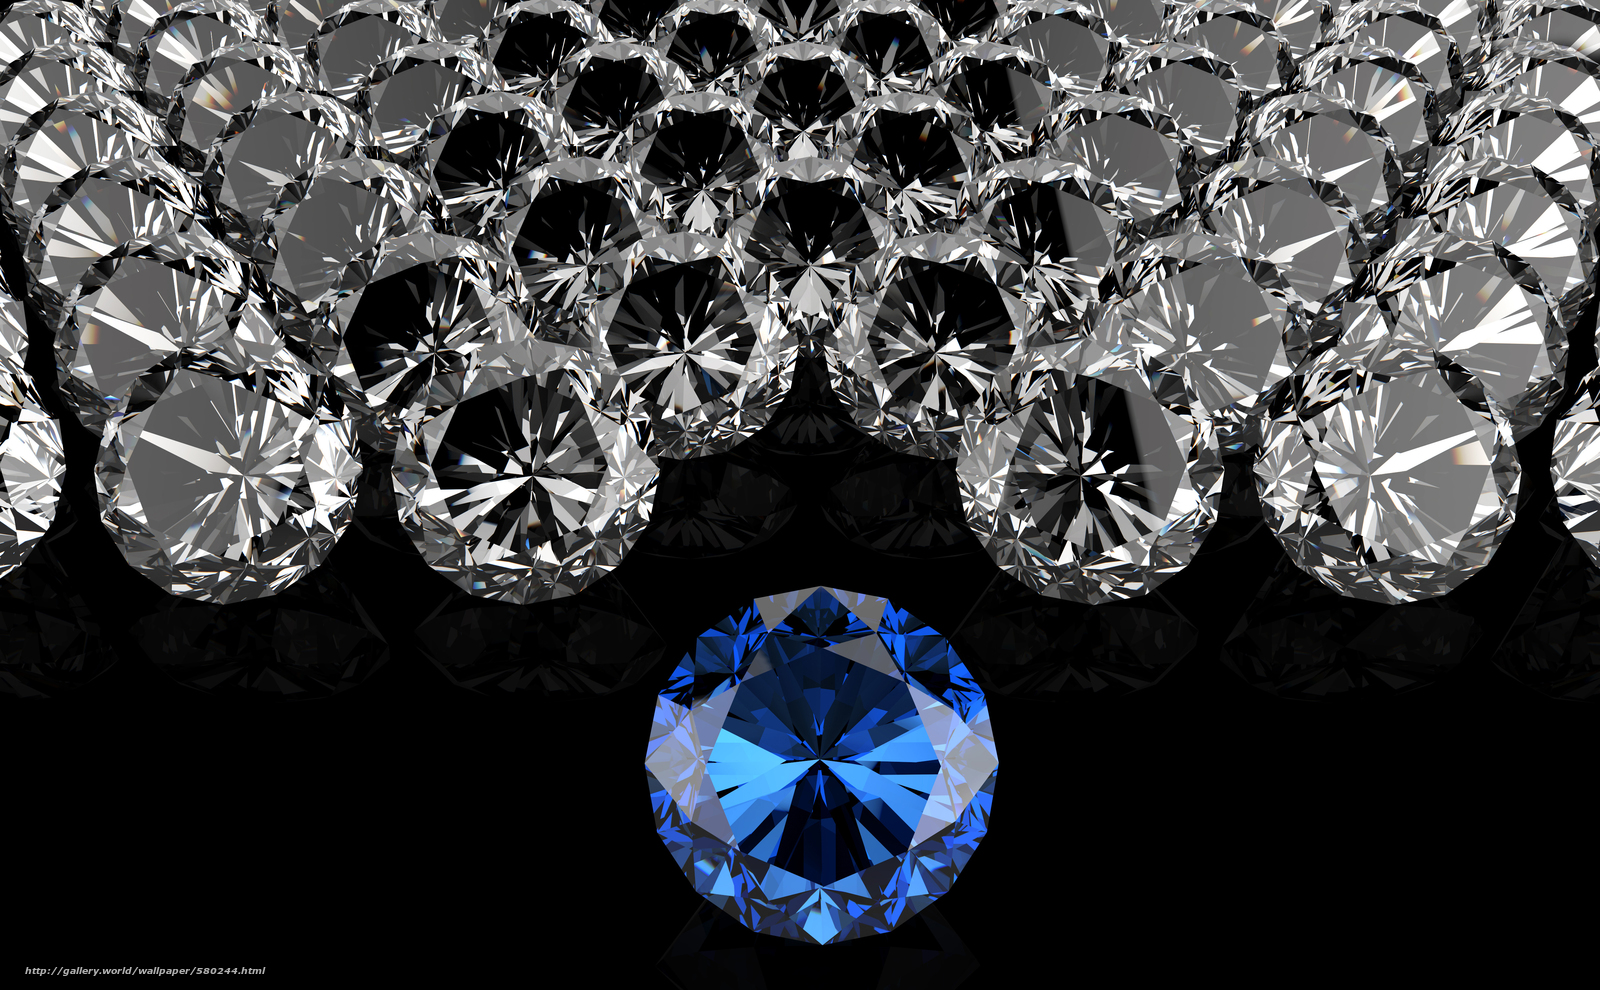 Download wallpaper BLUE DIAMOND Pebbles Diamonds black background